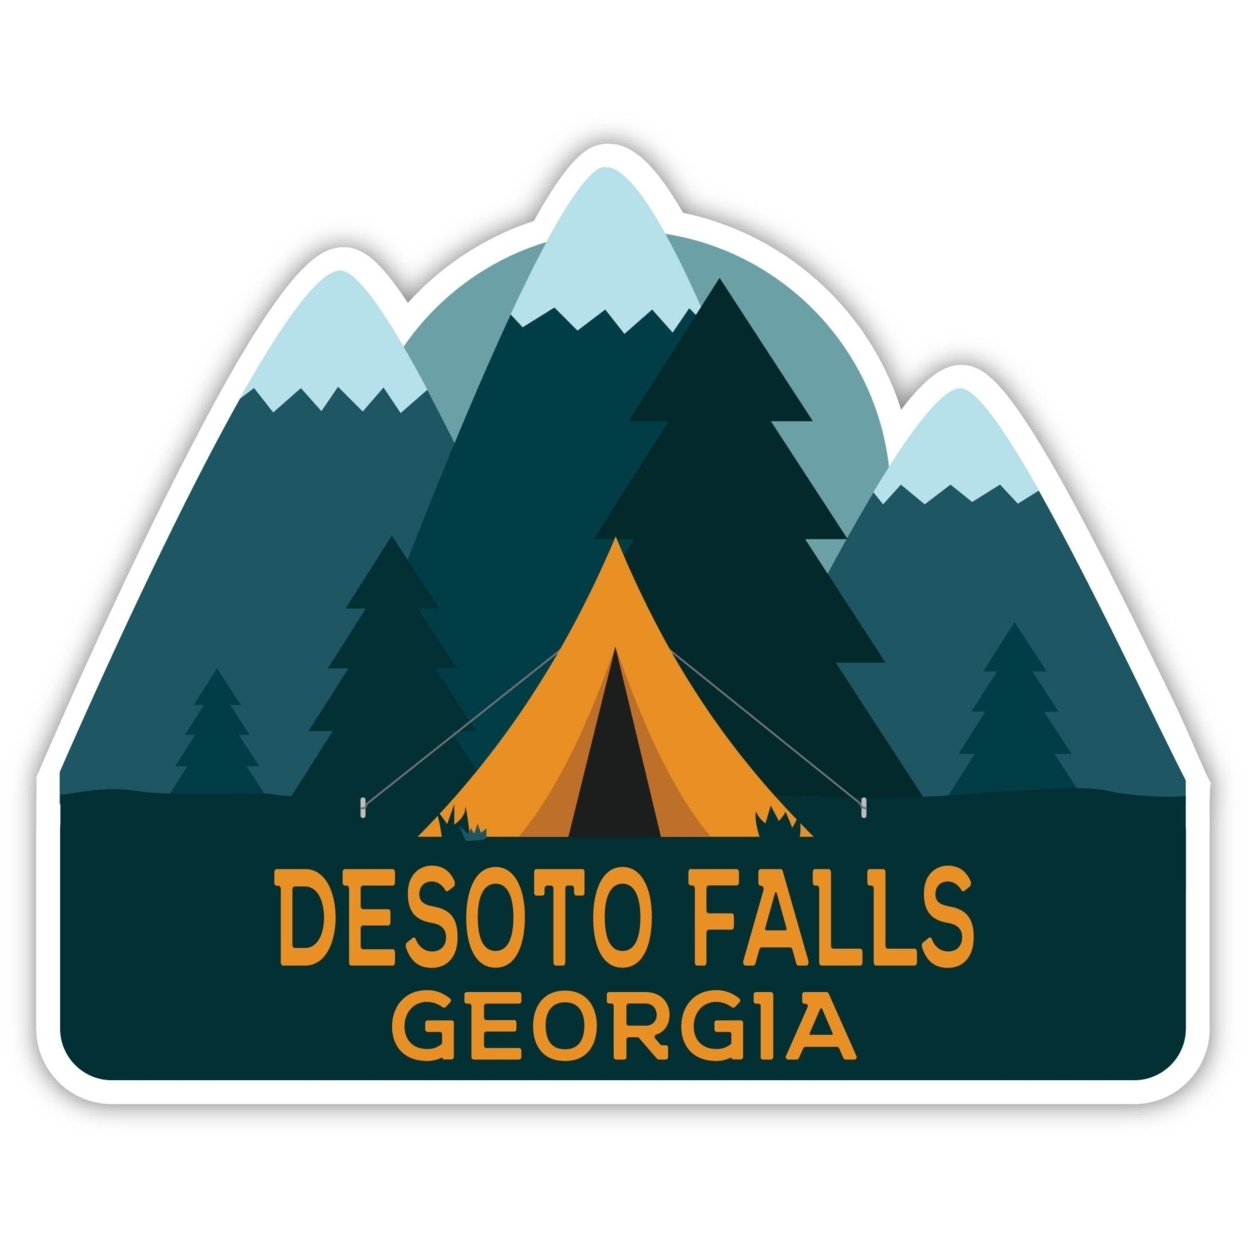 DeSoto Falls Georgia Souvenir Decorative Stickers (Choose Theme And Size) - 4-Pack, 6-Inch, Tent